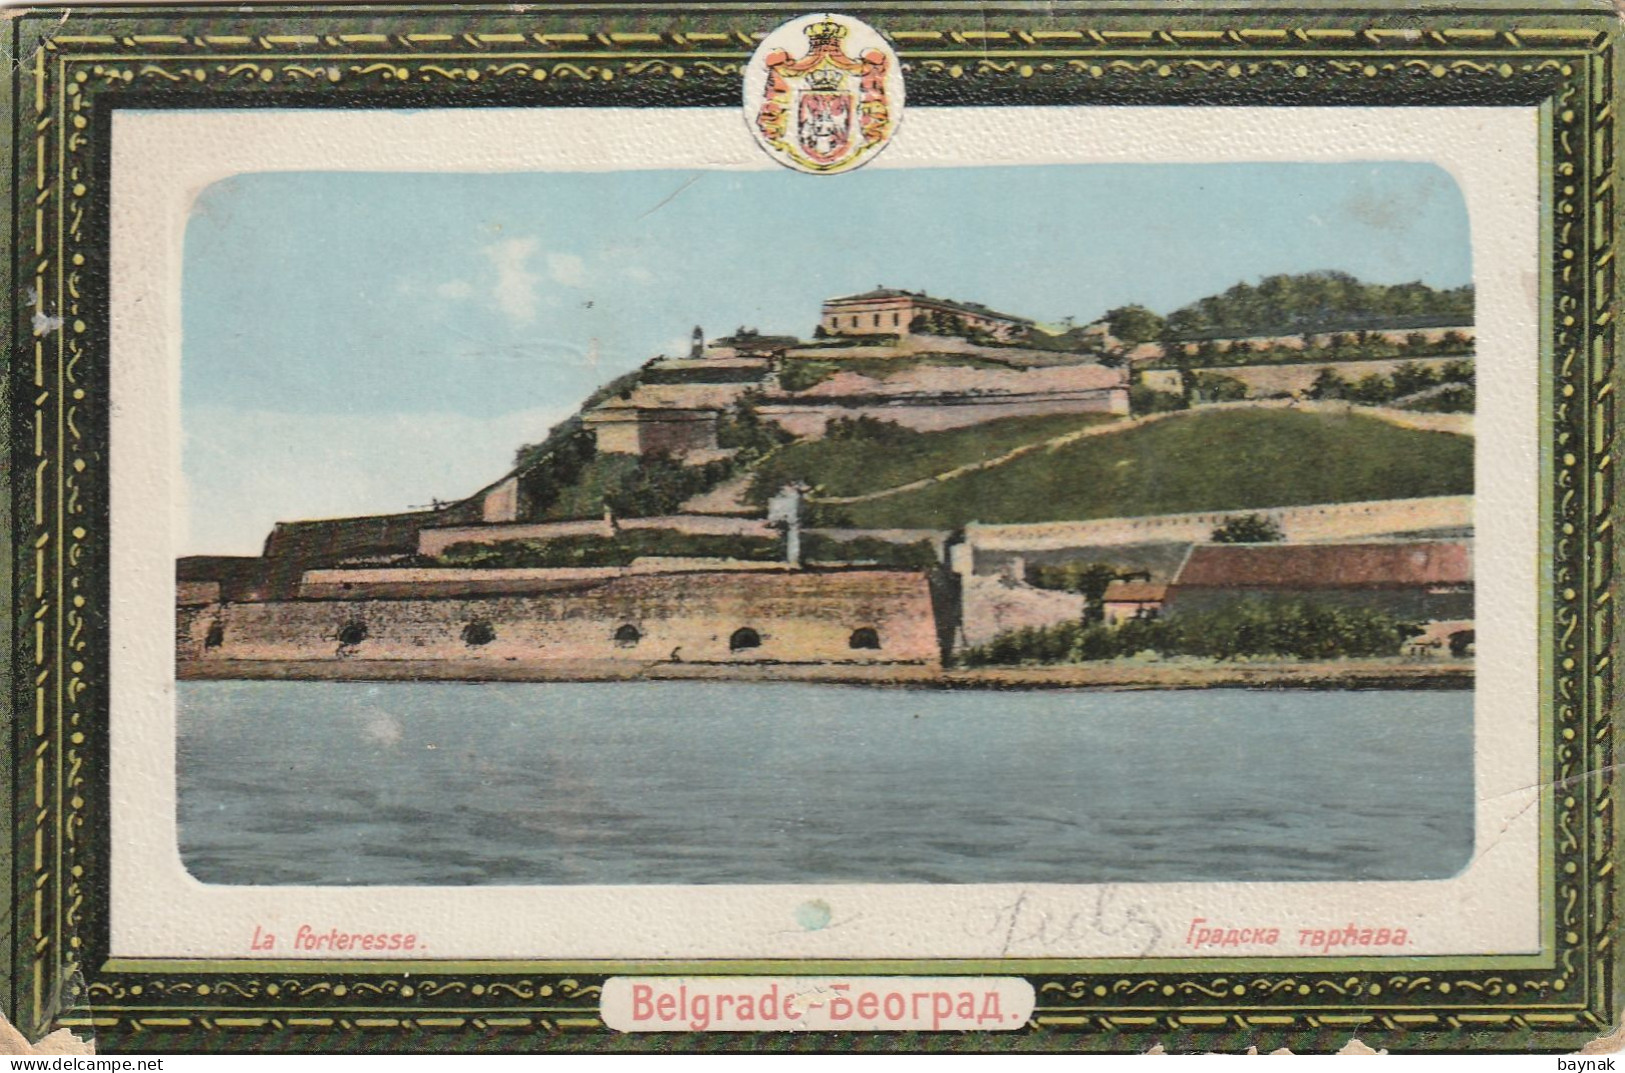 BGD790  --  BEOGRAD  --  LA  FORTERESSE --  1911 - Serbien